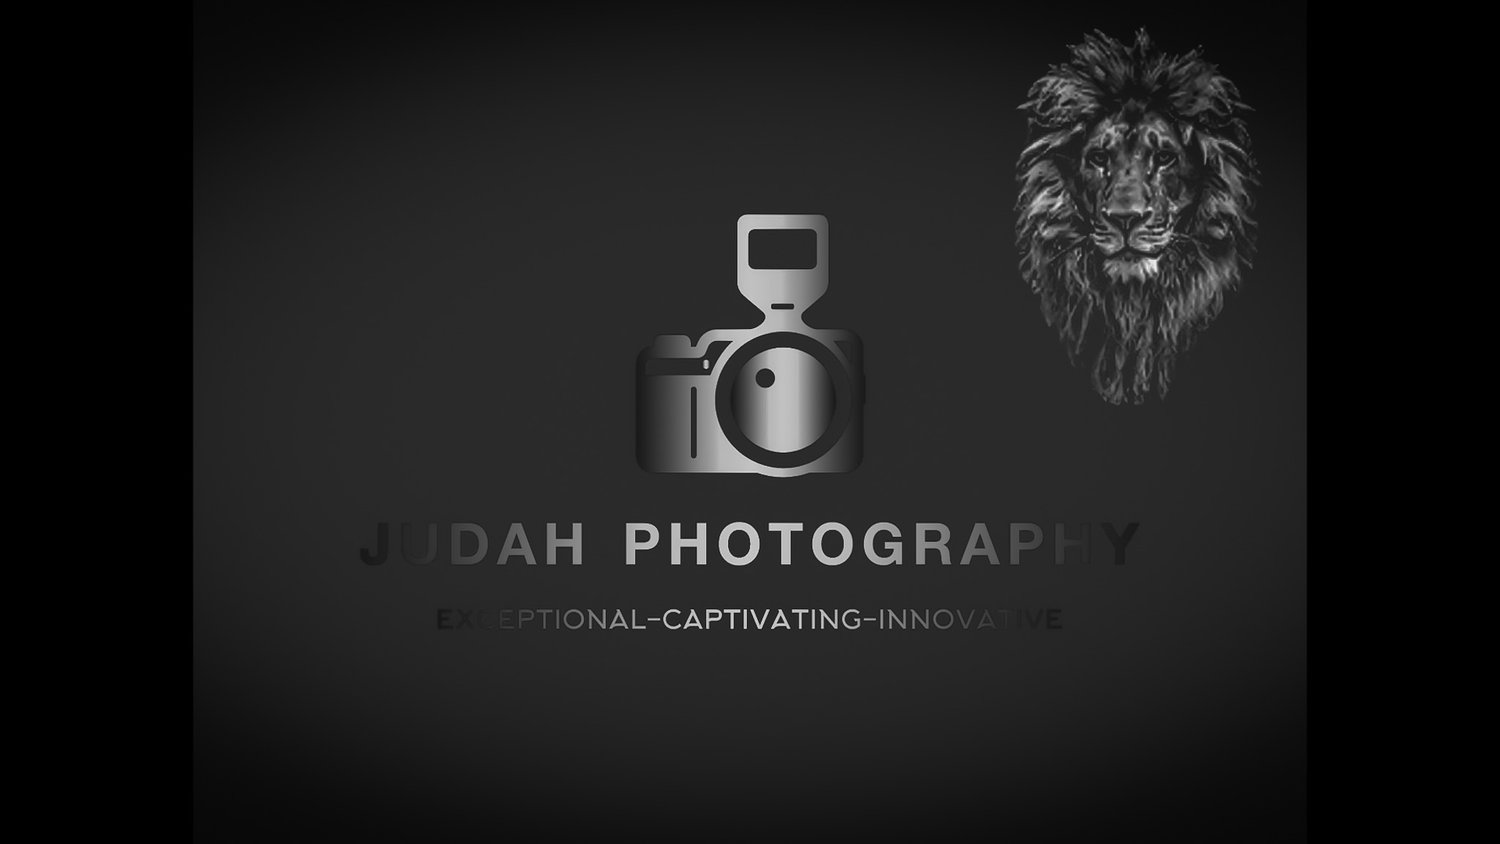 Judah Photography